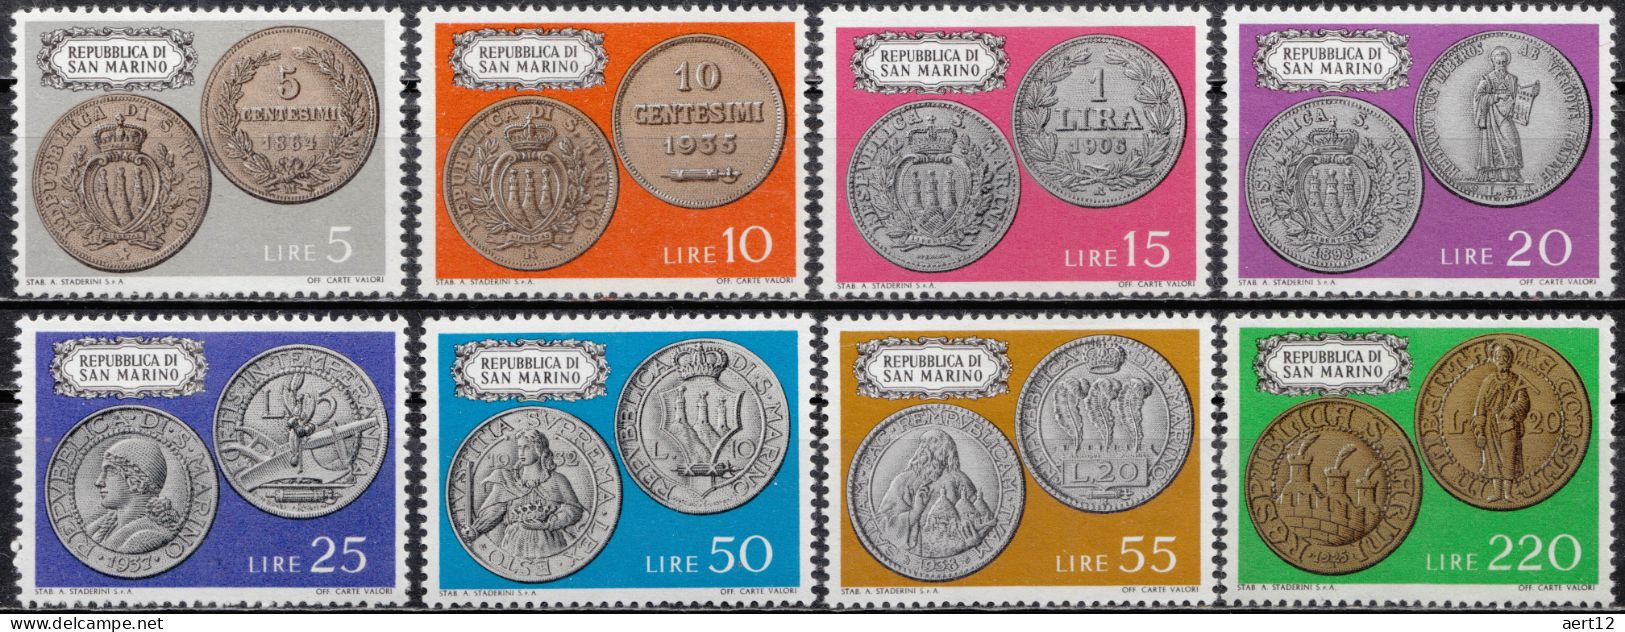 1972, San Marino, Coins Of San Marino, Coins, Economy, Numismatics, 8 Stamps, MNH(**), SM 1017-24 - Unused Stamps